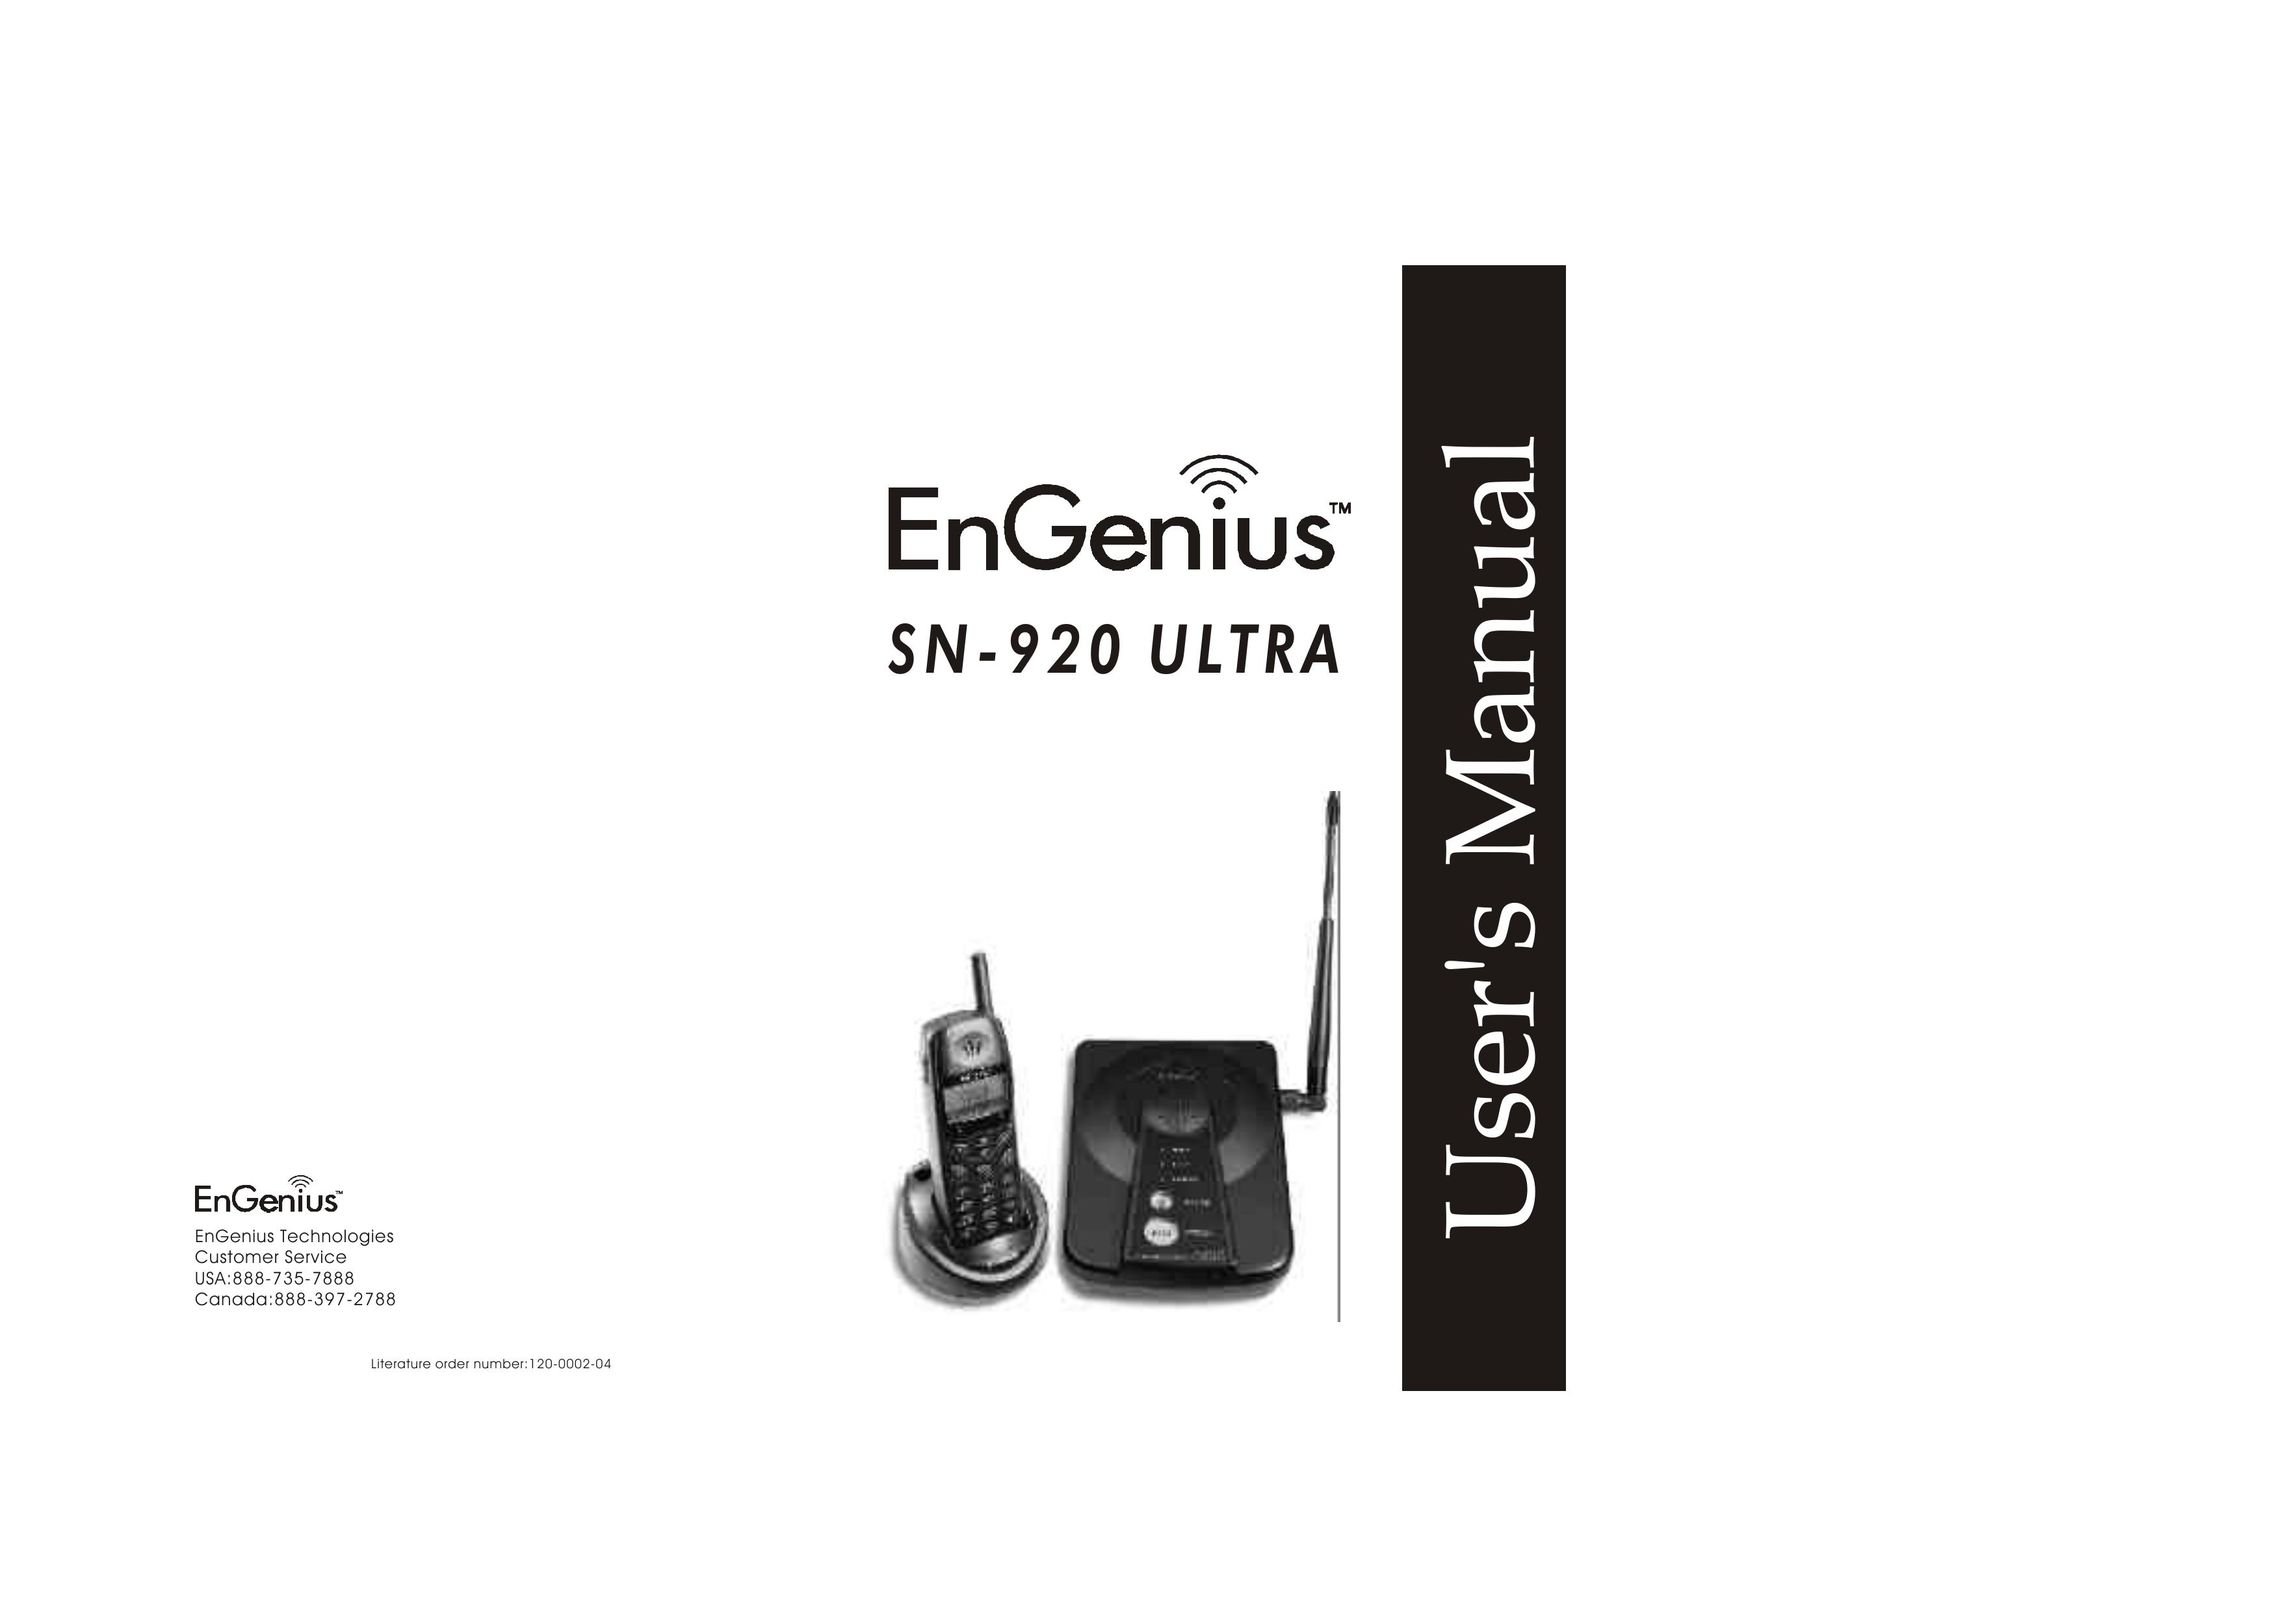 EnGenius Technologies SN-920 ULTRA Cordless Telephone User Manual